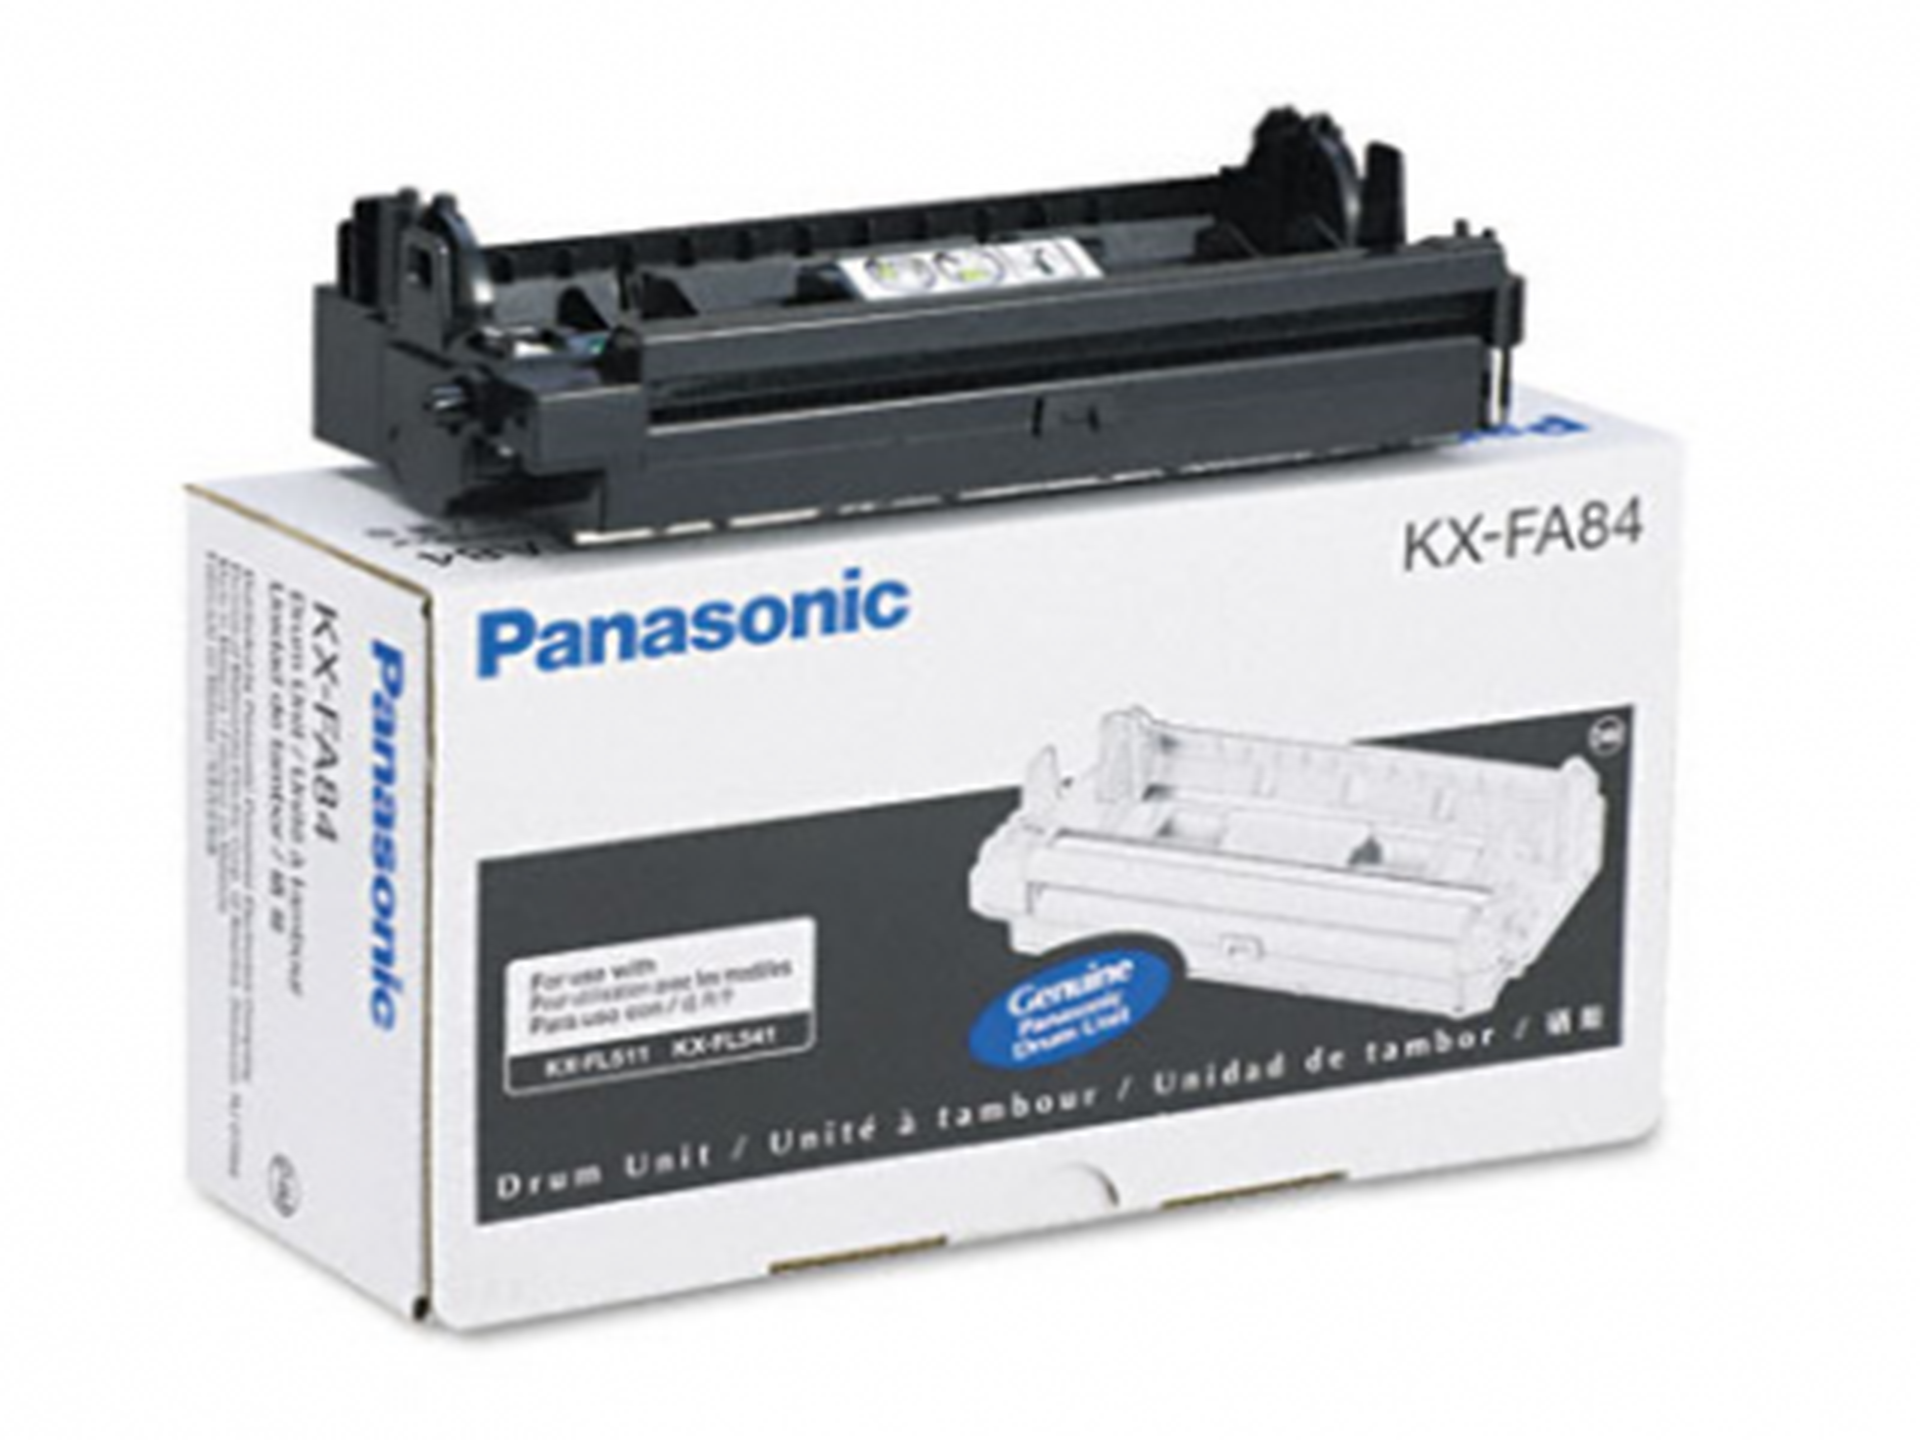 Panasonic KX-FL 512 / 542 / 612, KX-FLM 652 / 662 / 672